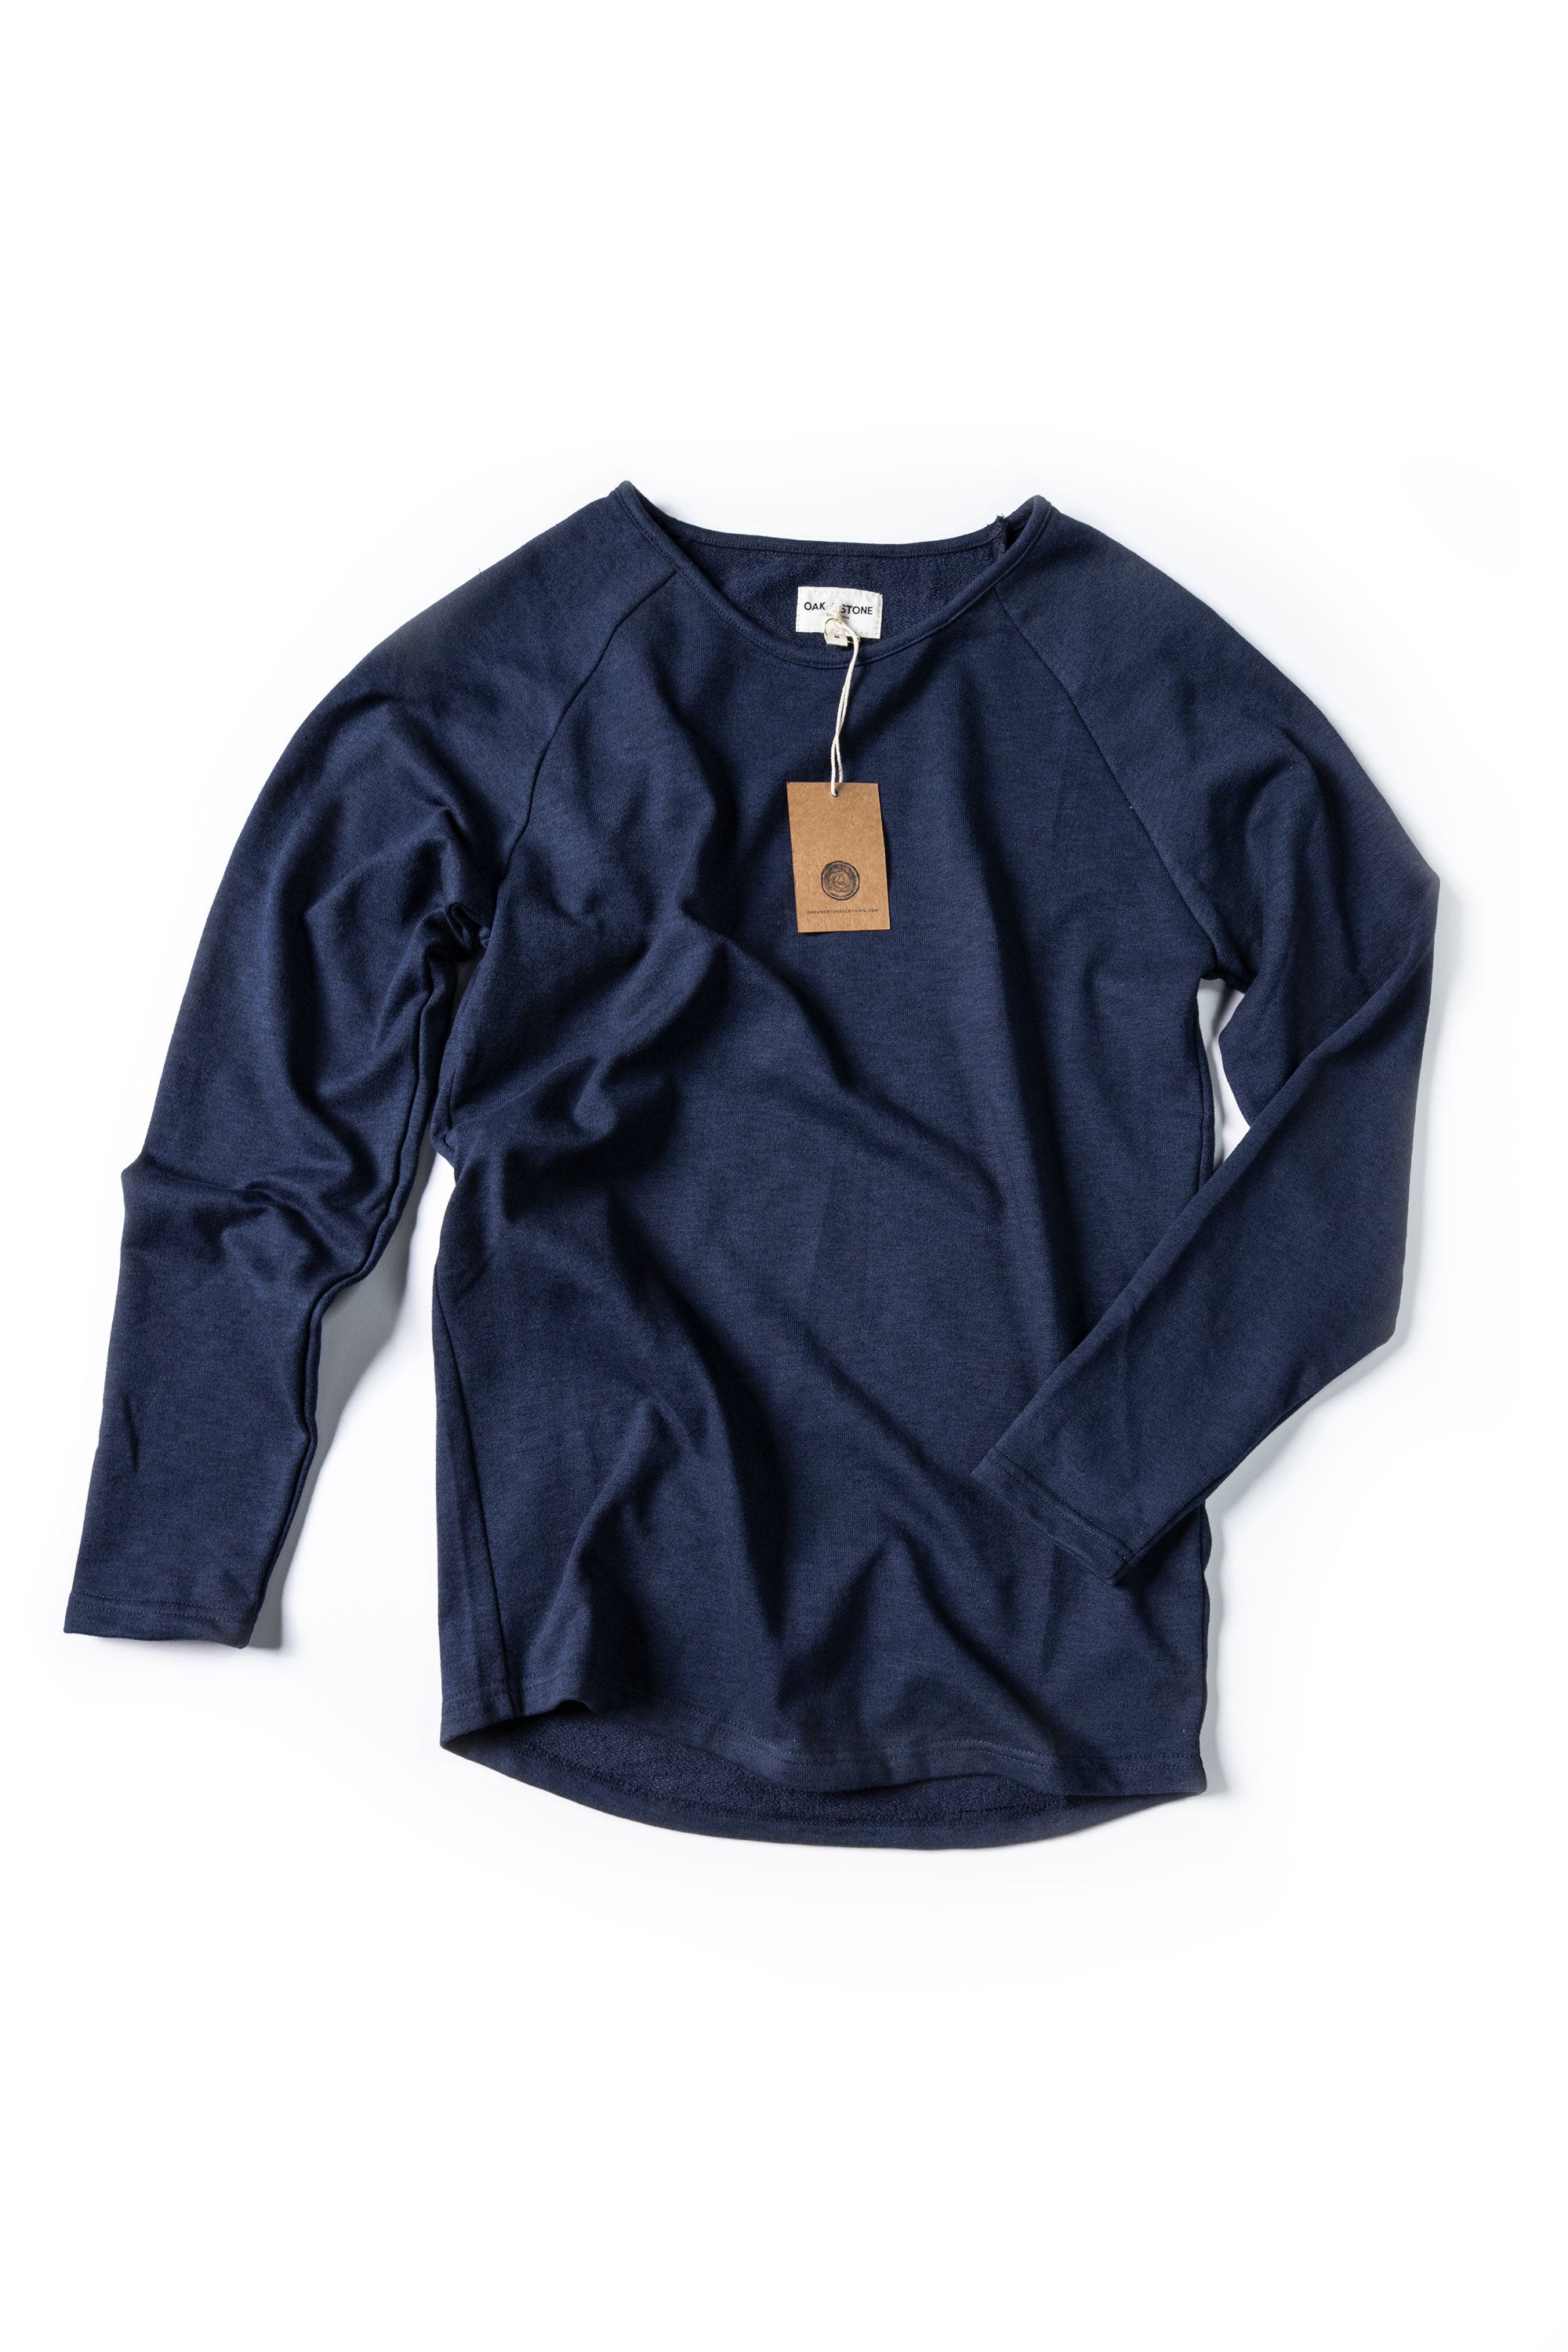 Terry Sweater - Heathered Blue - Oak & Stone Clothing Co.